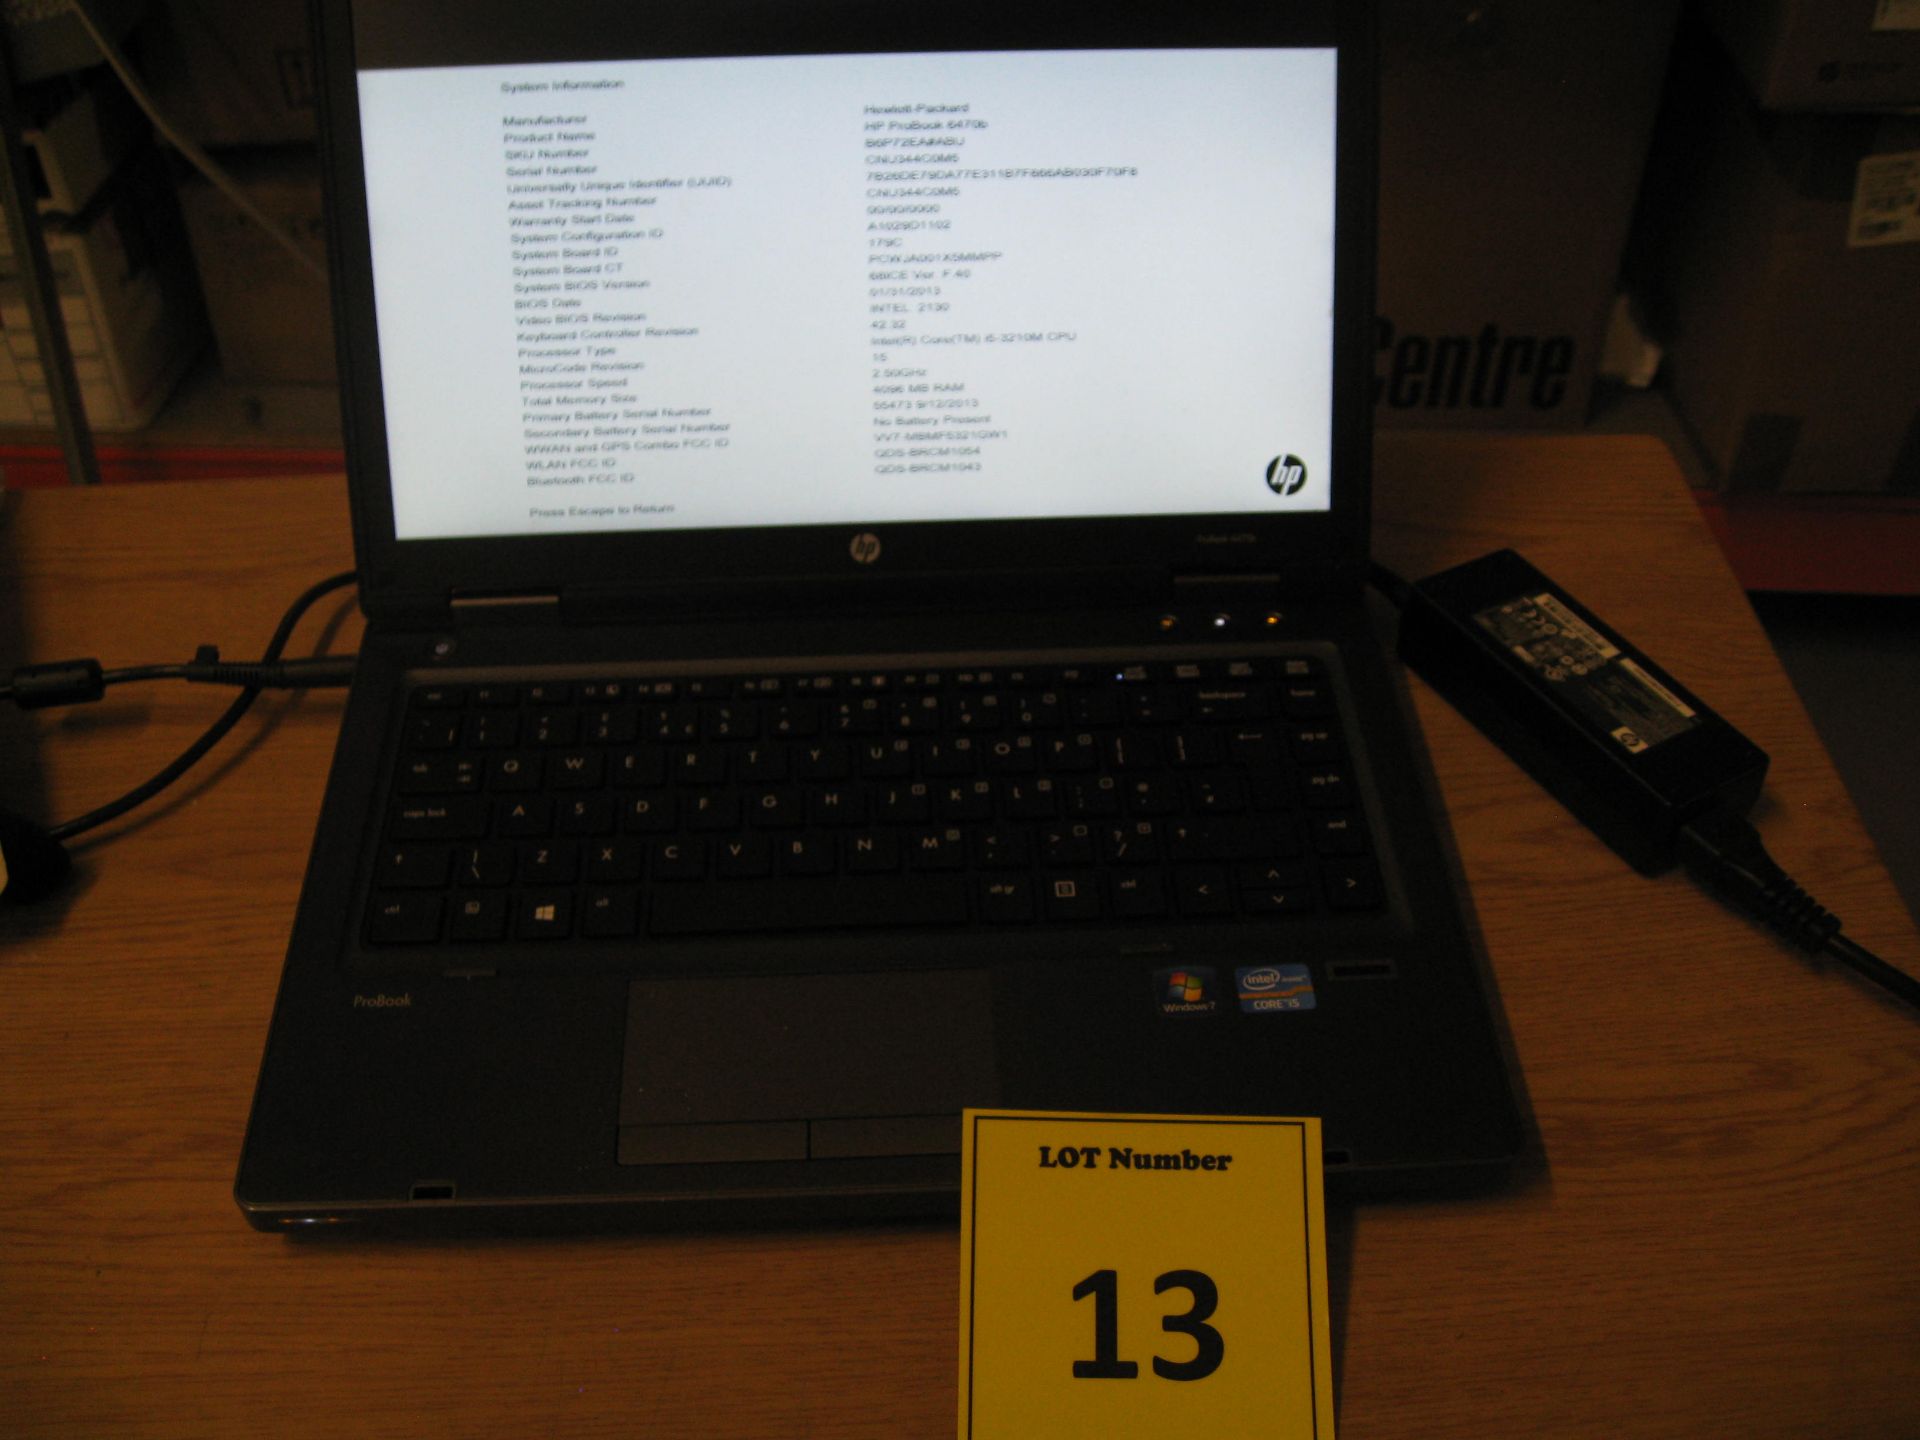 HP Probook 6470b Laptop, C-i5/2.50GHZ, 4GB RAM/500 GB HDD, dvdrw, psu - Win 7 Pro COA MISSING SCREEN